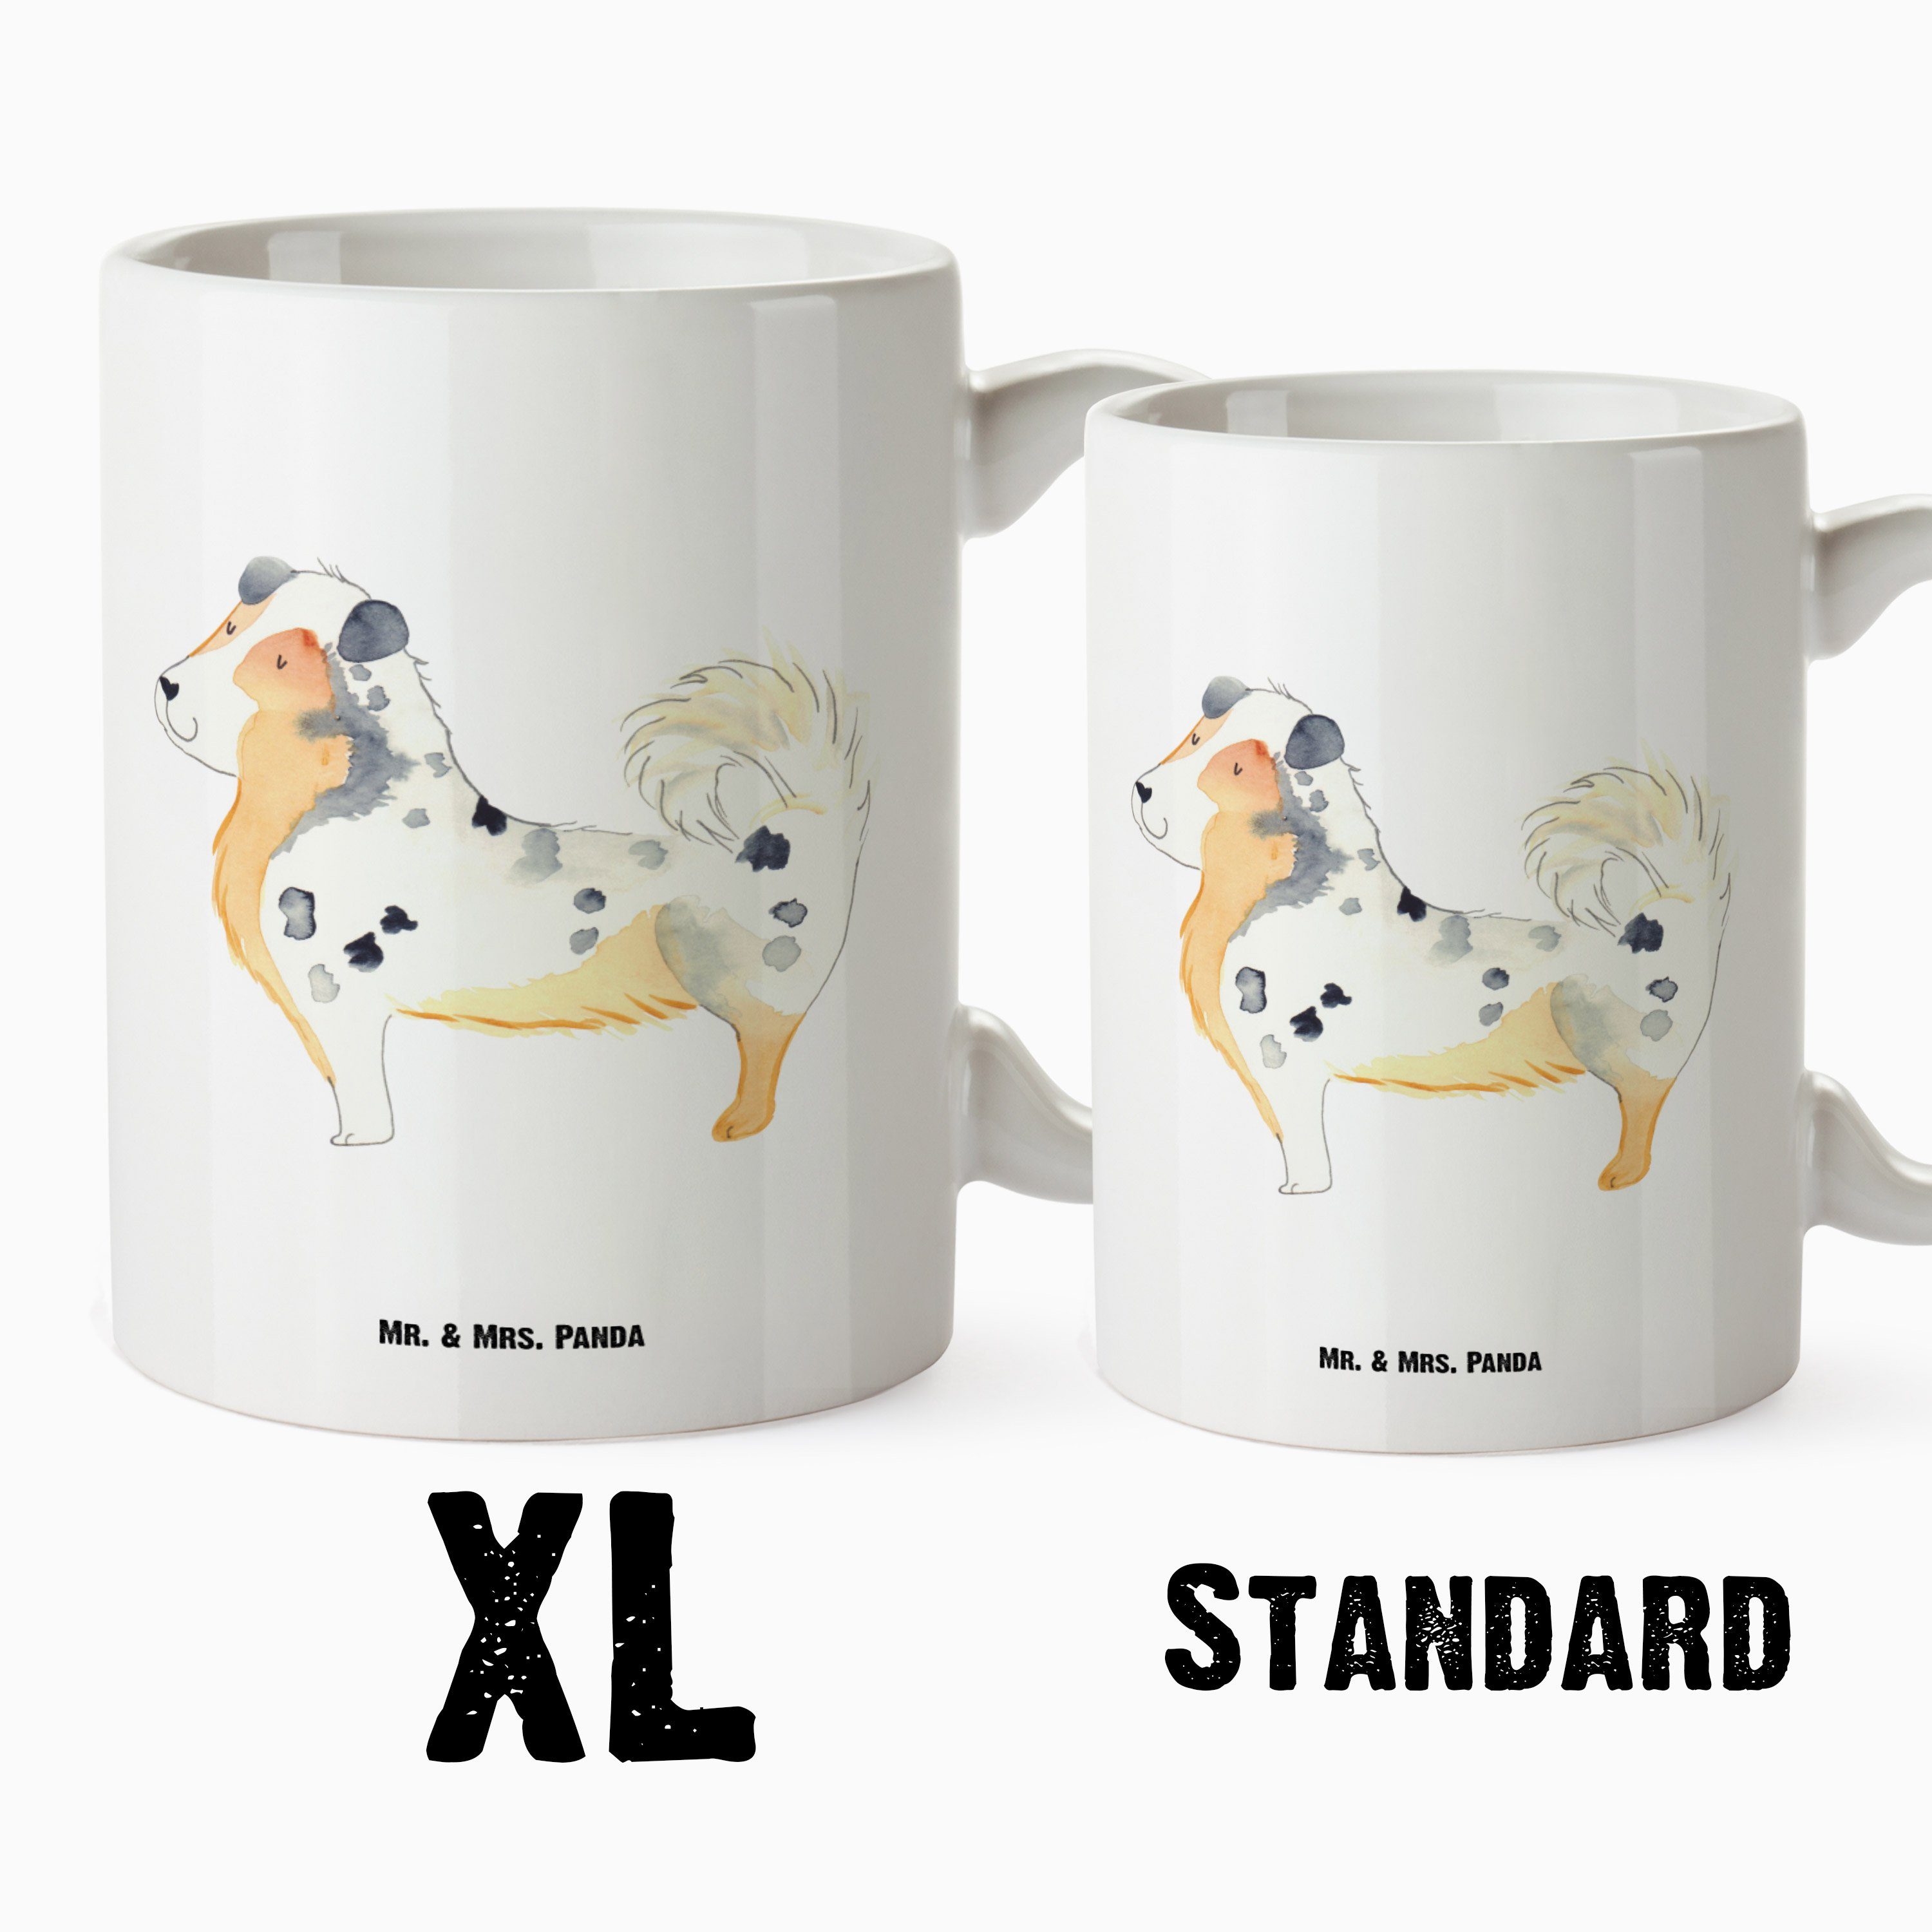 Mr. & Mrs. Panda Tasse Shepherd XL XL Weiß Geschenk, Keramik Hundebesitzer, Australien Vier, Tasse - Becher, 